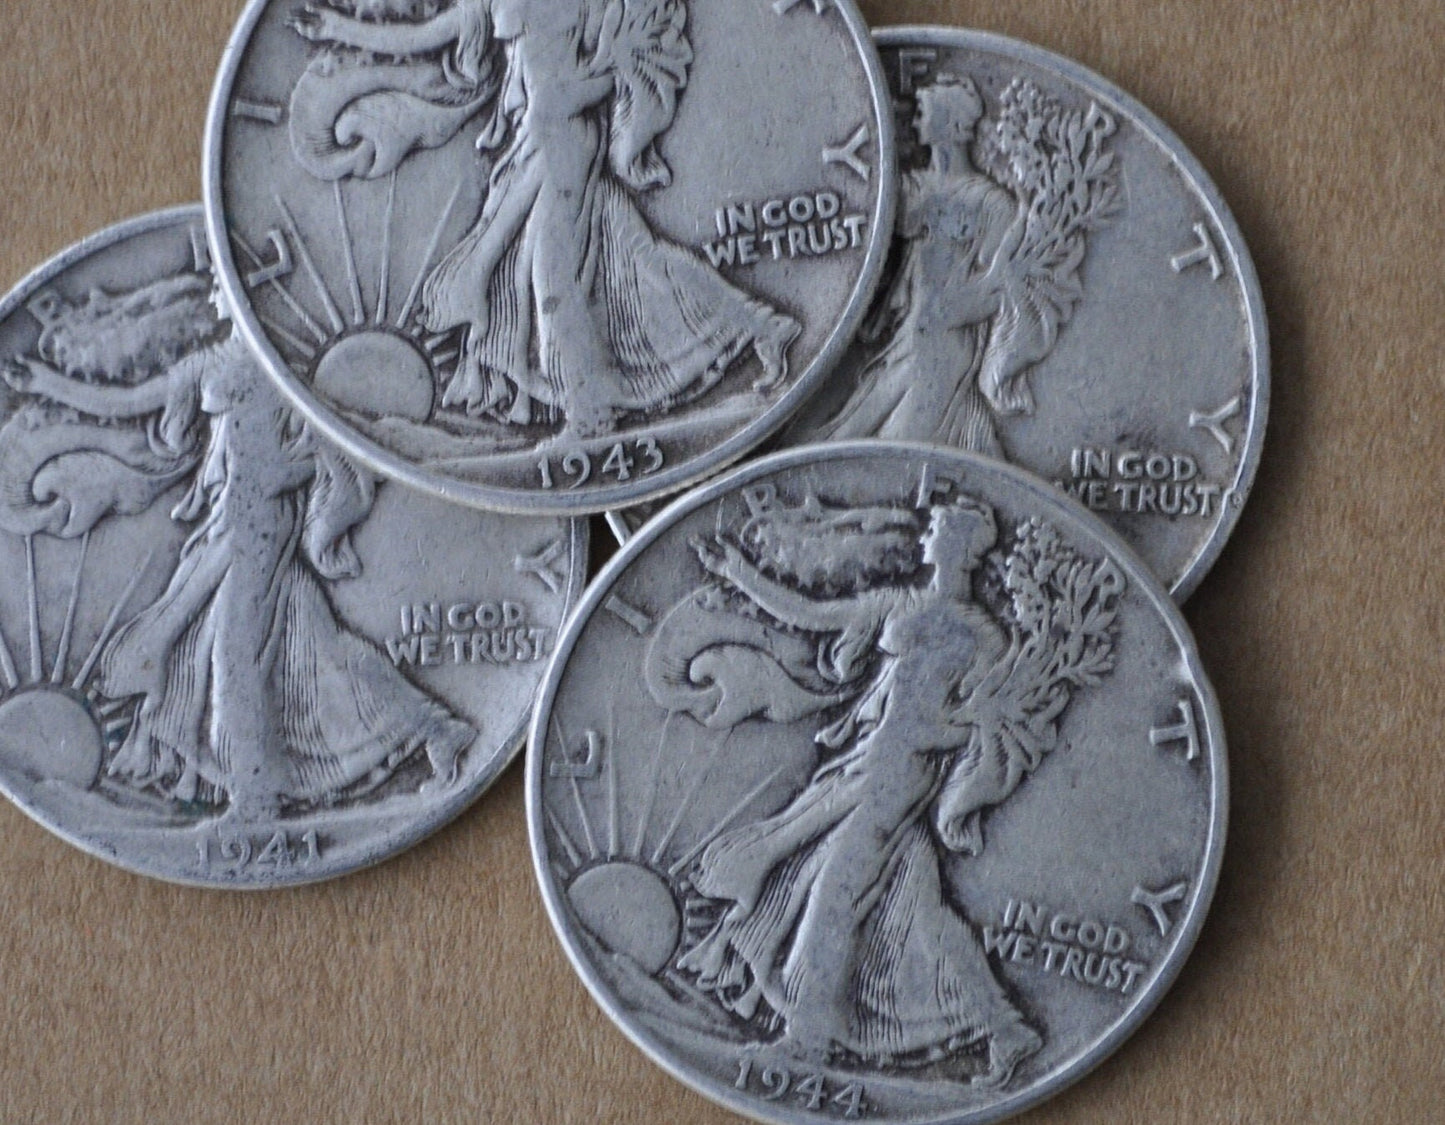 Walking Liberty Half Dollars - Silver Half Dollar - WLH - 1916-1947 - US Silver Half Dollars from the 1910s, 20s, 30s, and 40s